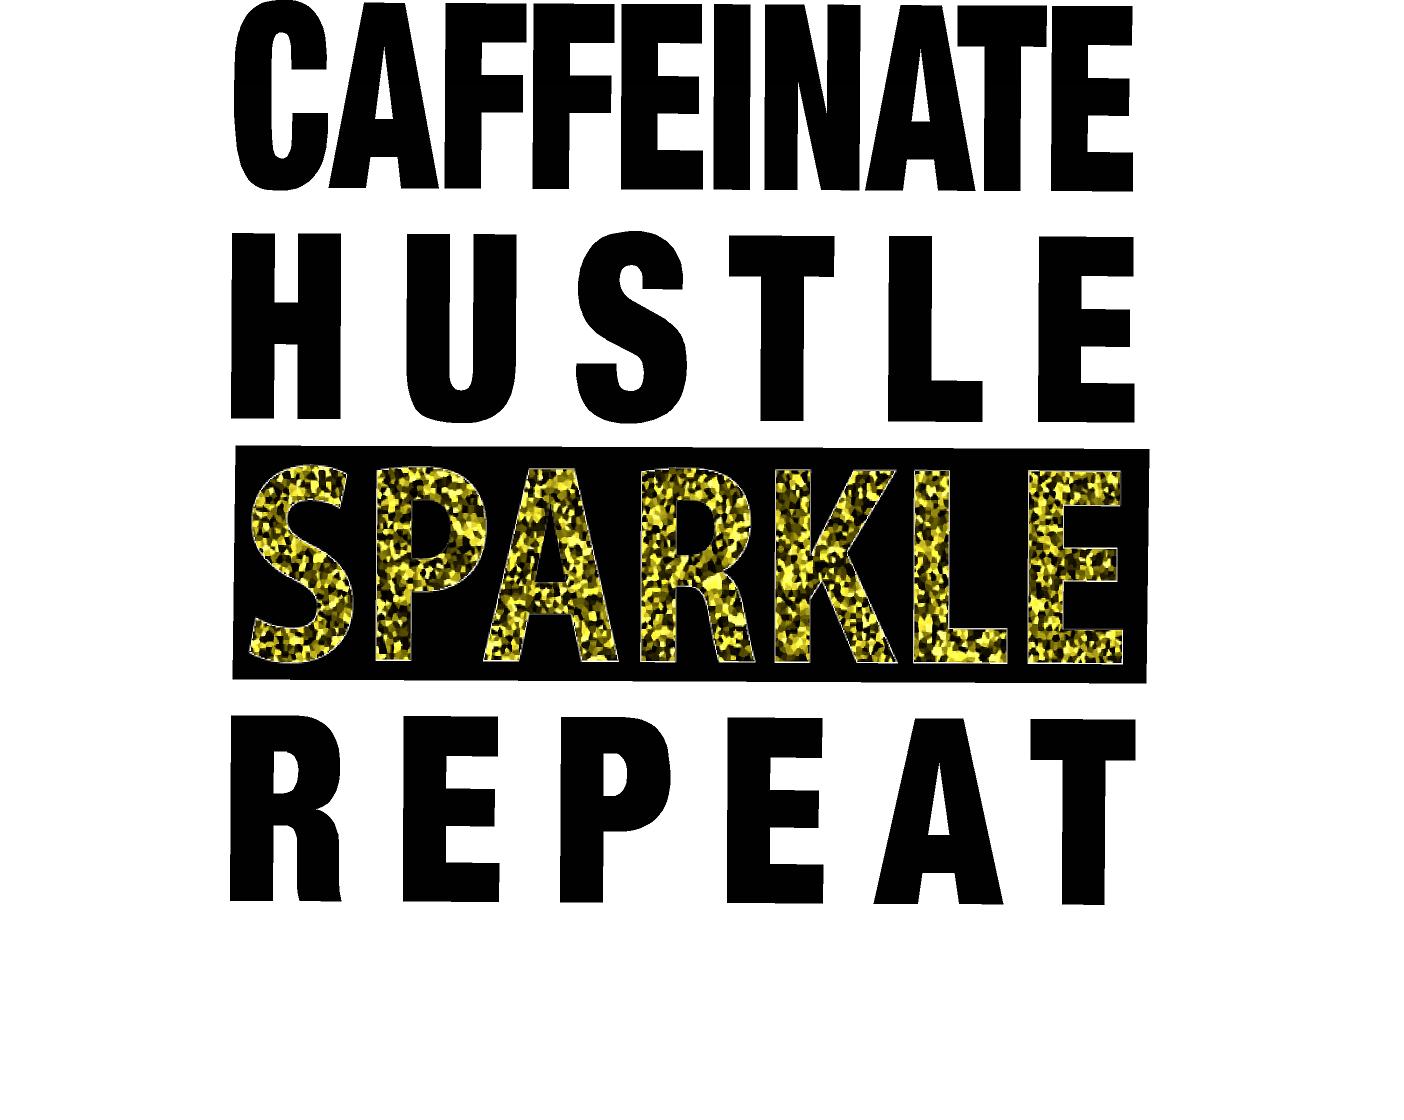 Caffeinate Hustle Sparkle Repeat